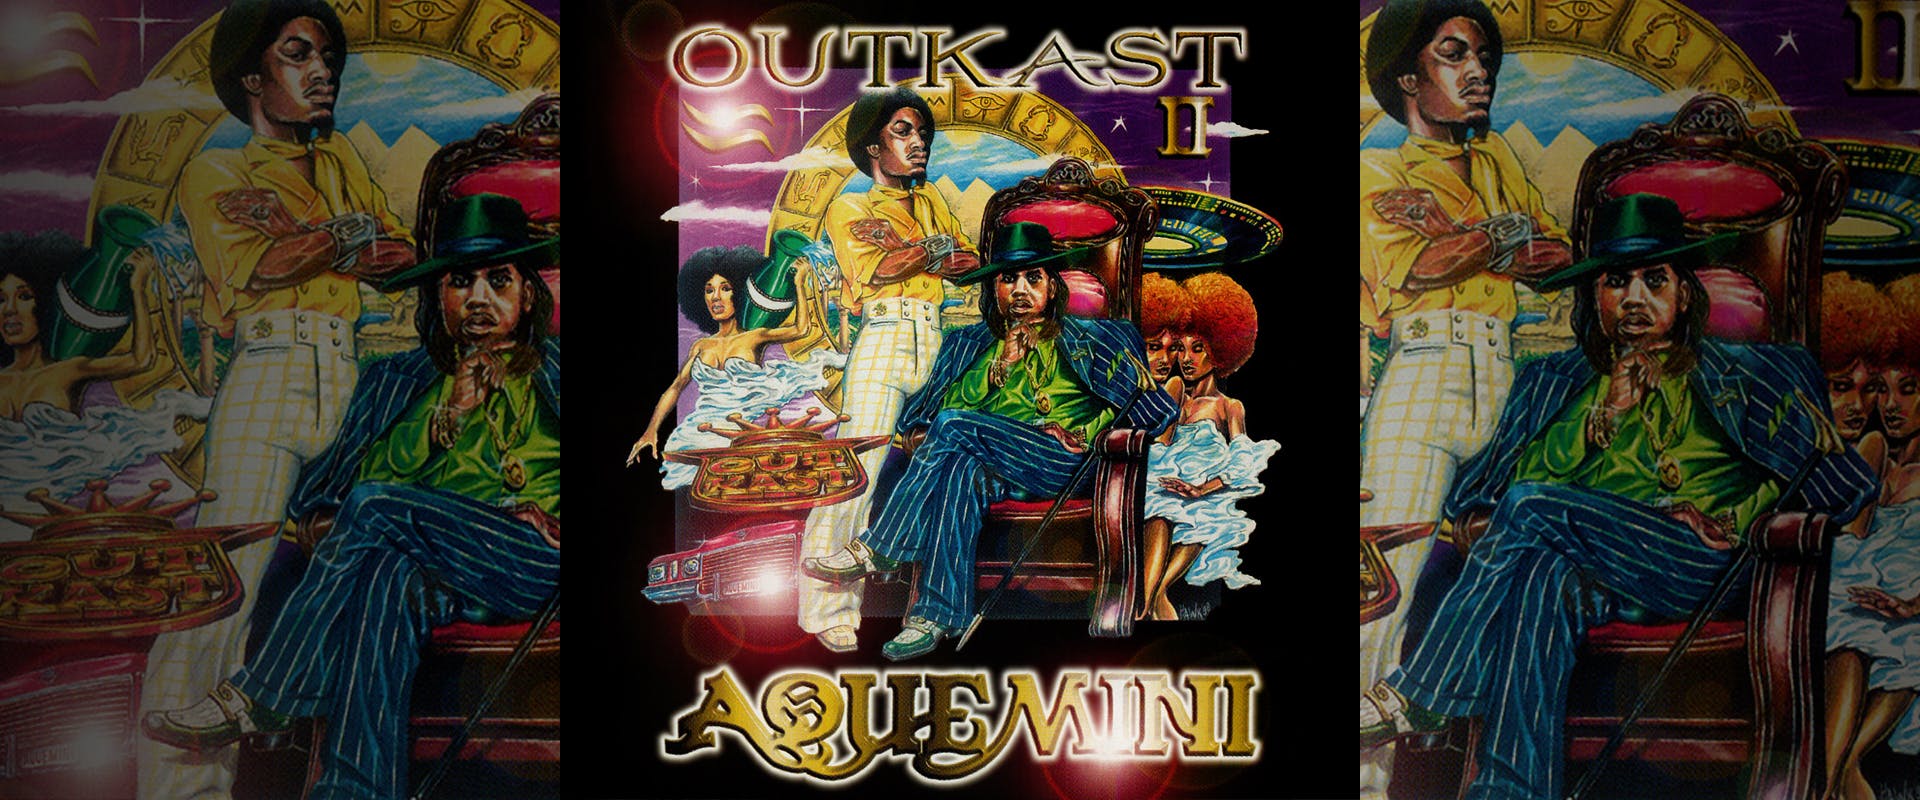 CLASSIC ALBUMS: AQUEMINI by OutKast